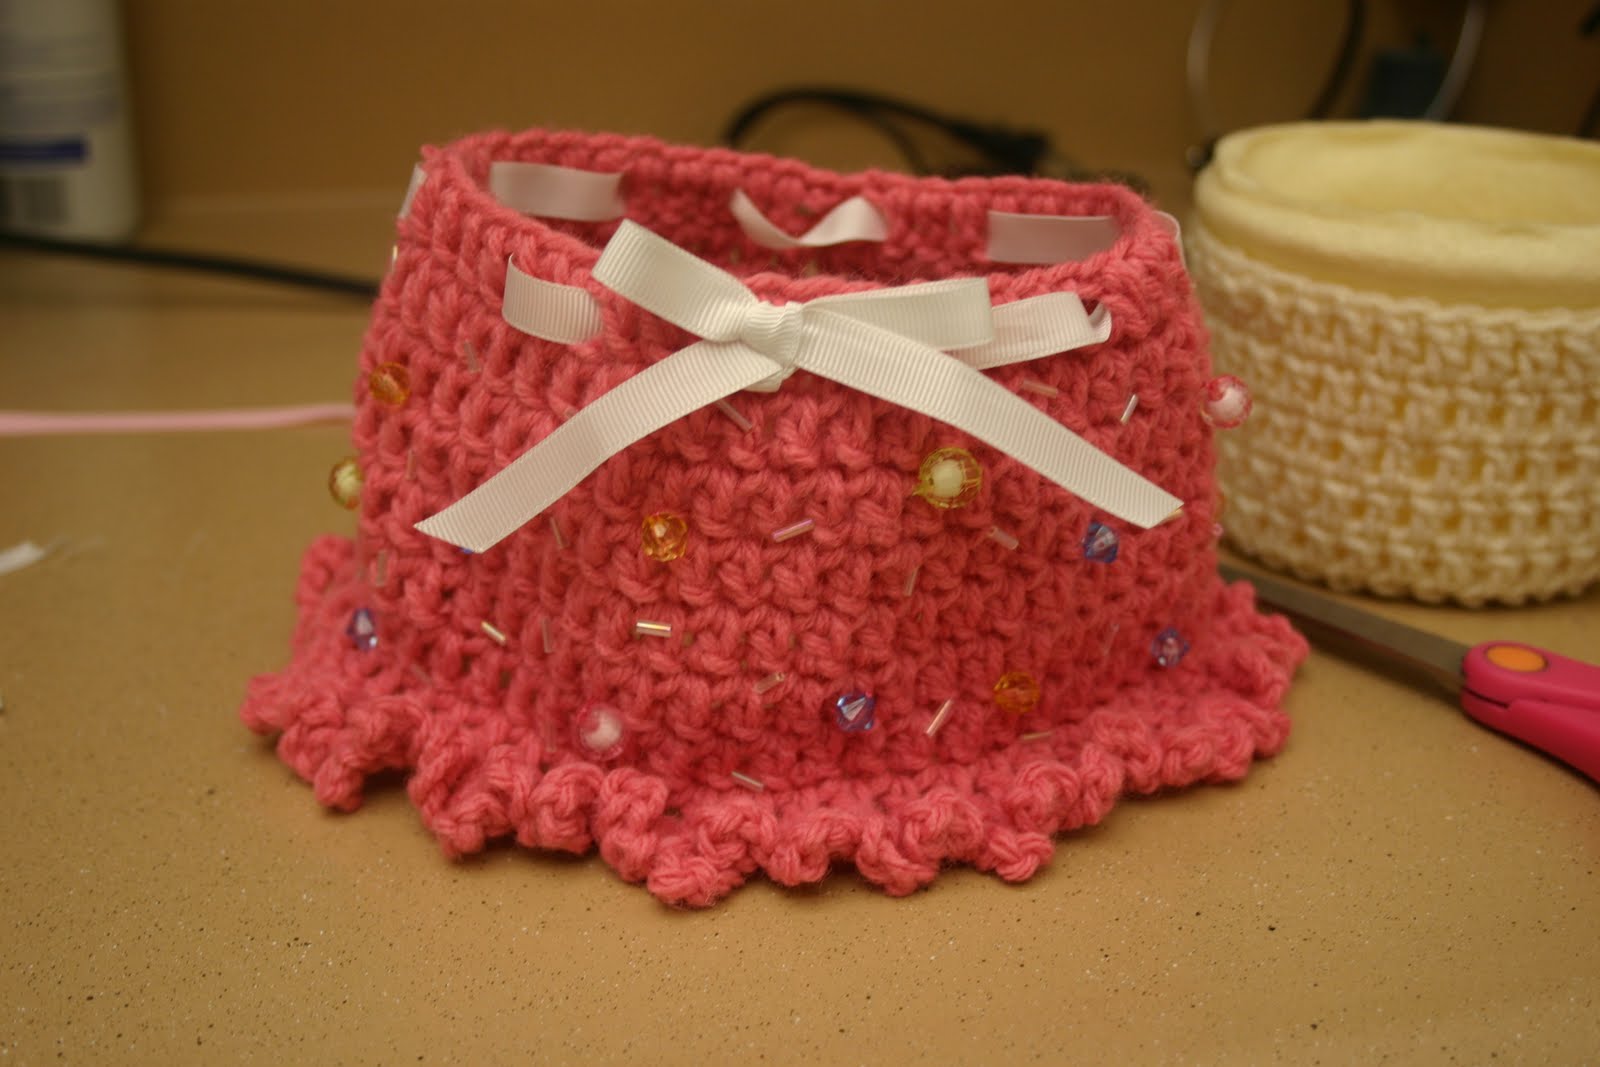 Honeybee Vintage: Crochet Cupcake Purse